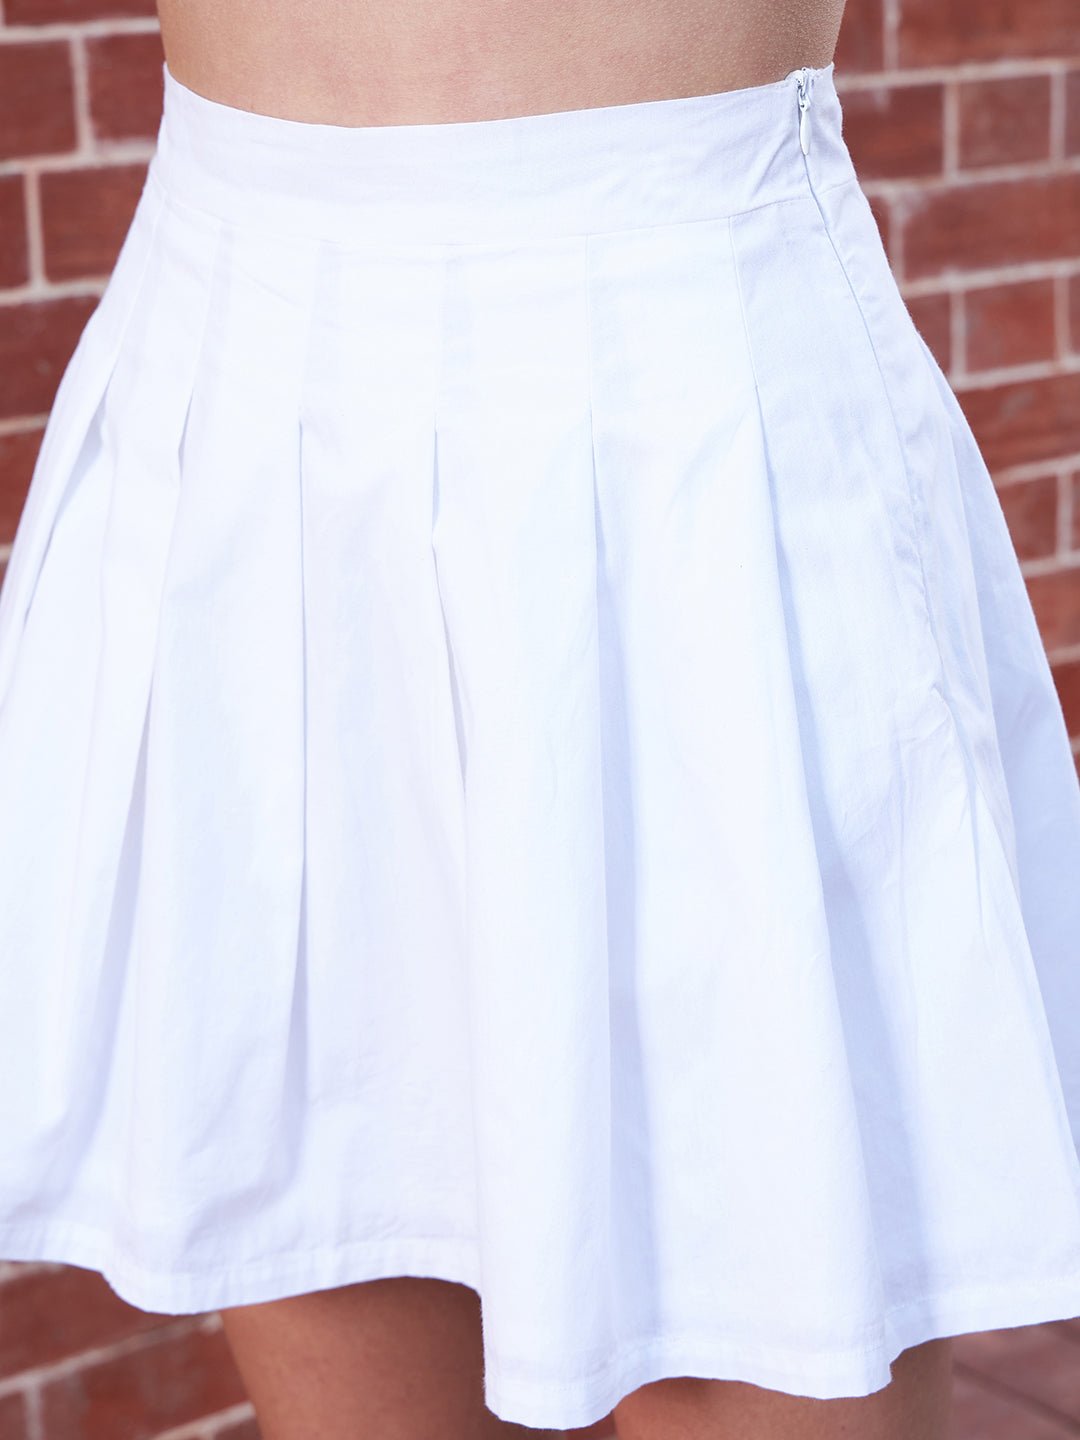 Folk Republic Women Solid White Elastic Waistband Cotton Slip-On Pleated Mini Skirt - #folk republic#